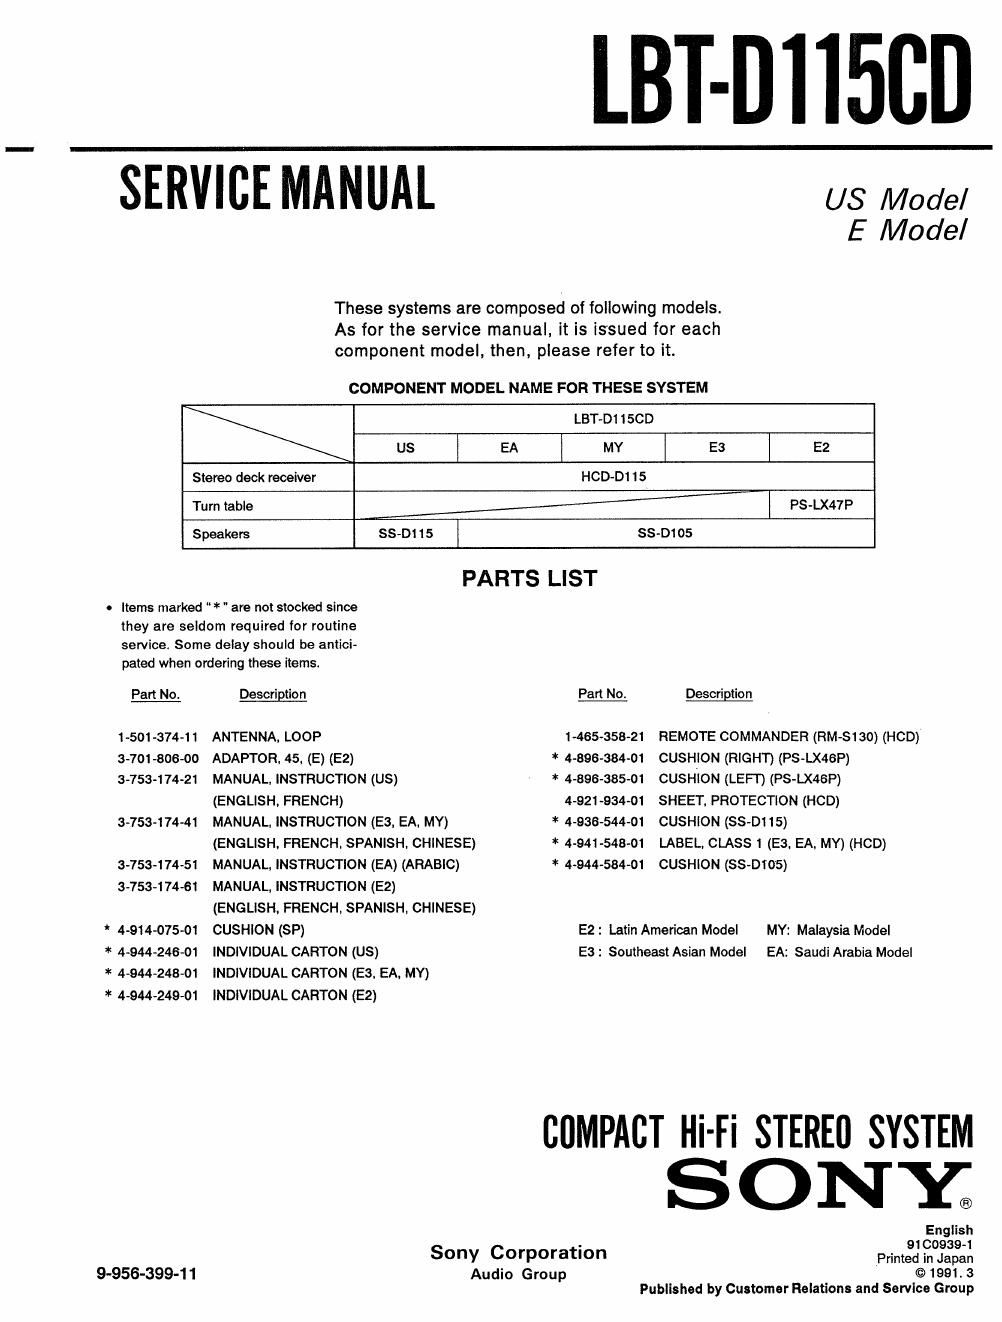 sony lbt d 115 cd service manual